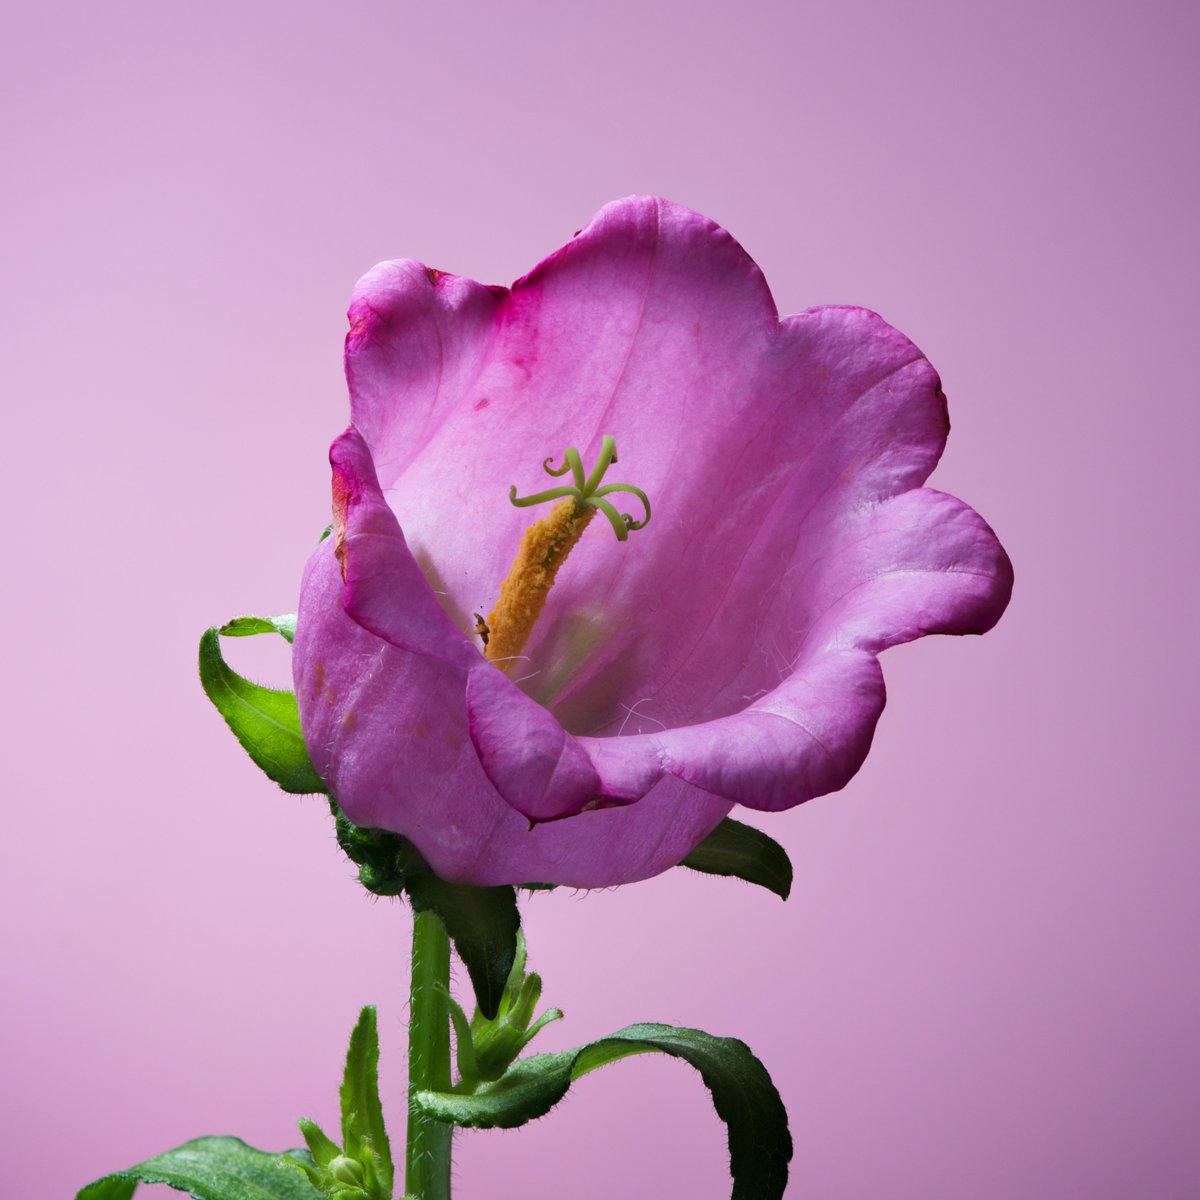 Flower photo of the day. Campanula.

#macro_globe #bloemenfotografie #raw_macro #macro_world #flowersandmacro #macroexperience #macroandflora #macroviewpoint  #raw_flowers #snap_flowers